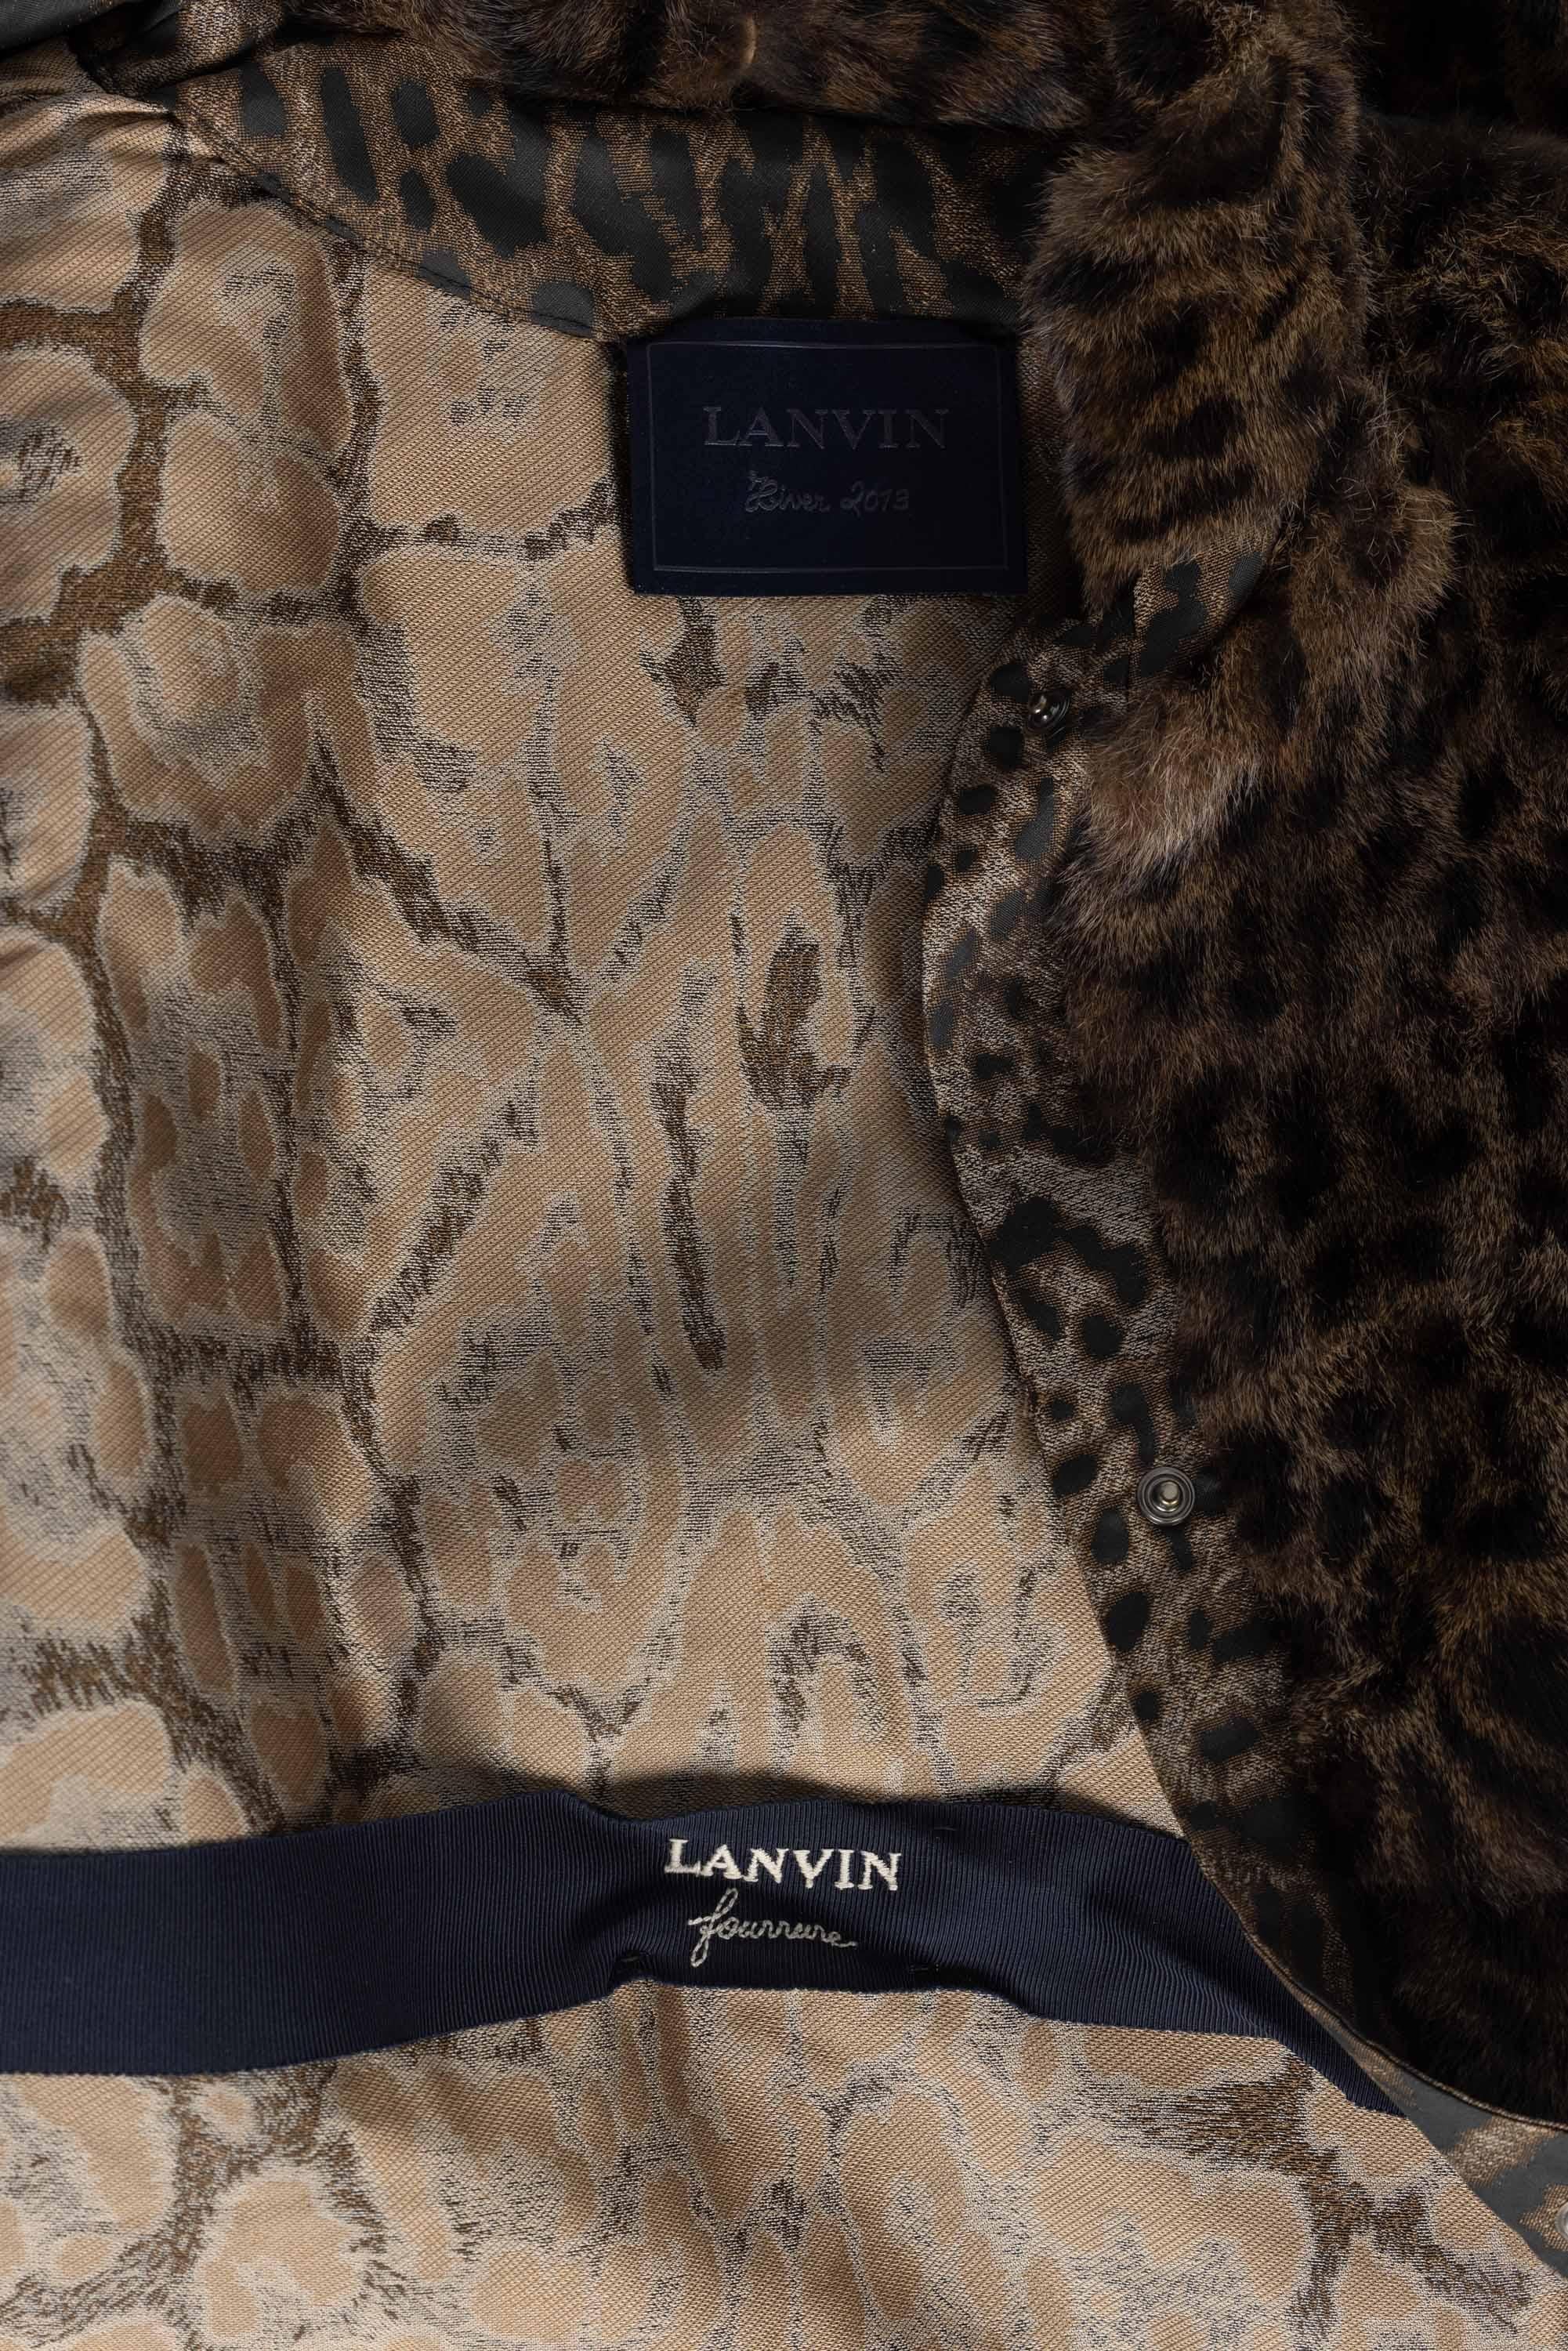 Lanvin Alber Elbaz F/W 2013 Leopard Fur & Taffeta Belted Trench Coat For Sale 8